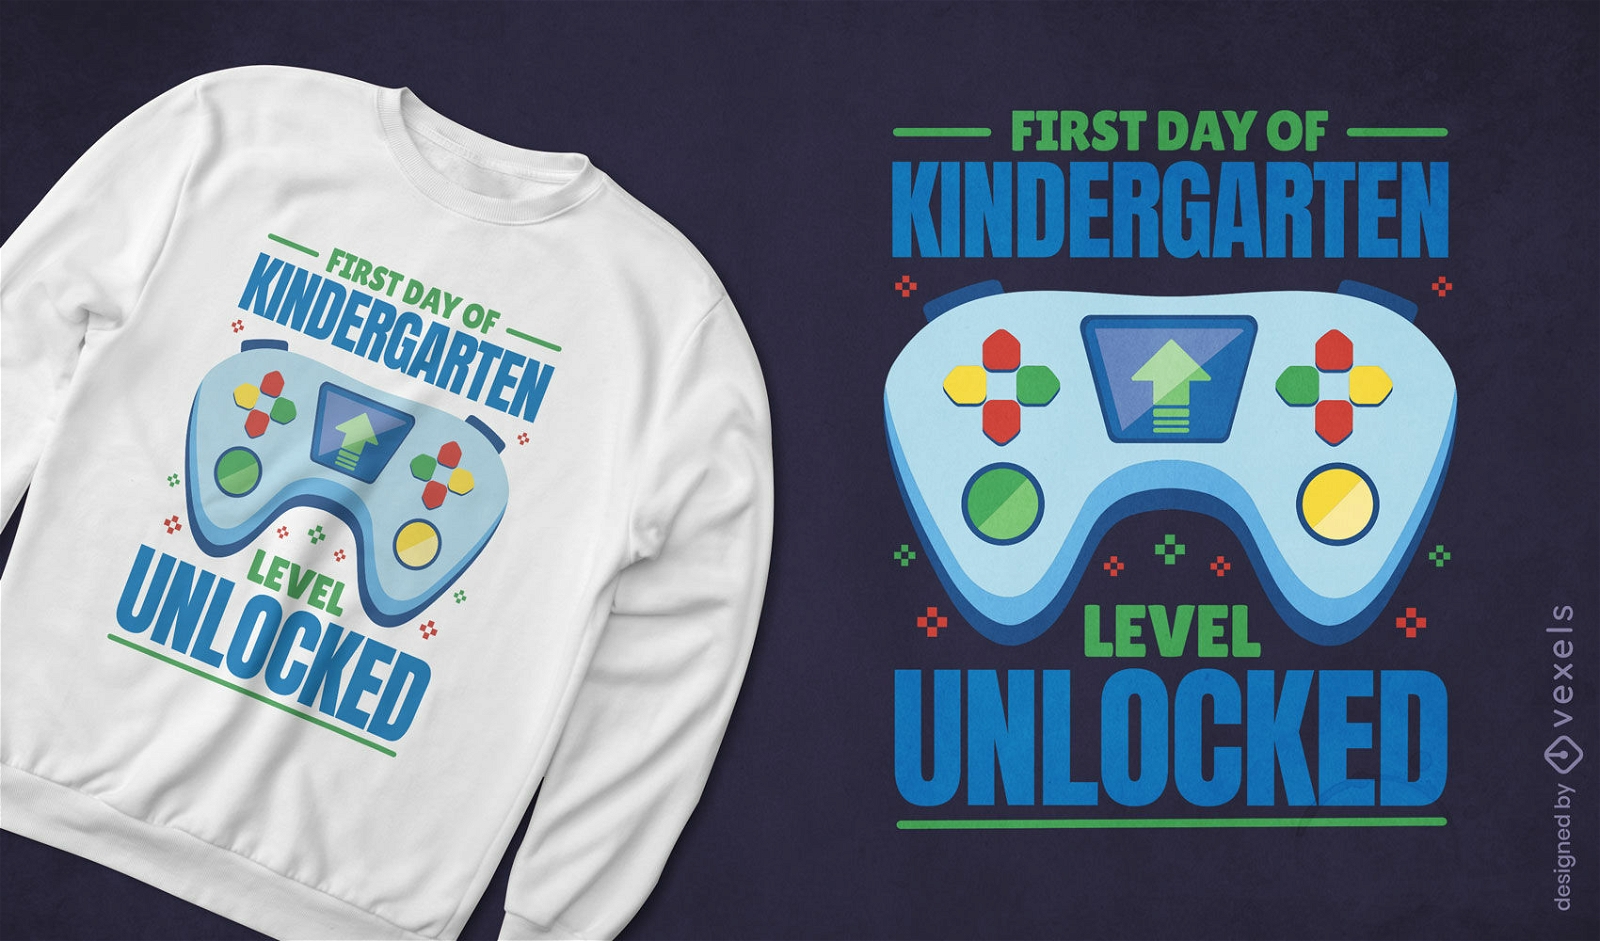 Joystick kindergarten unlocked t-shirt design